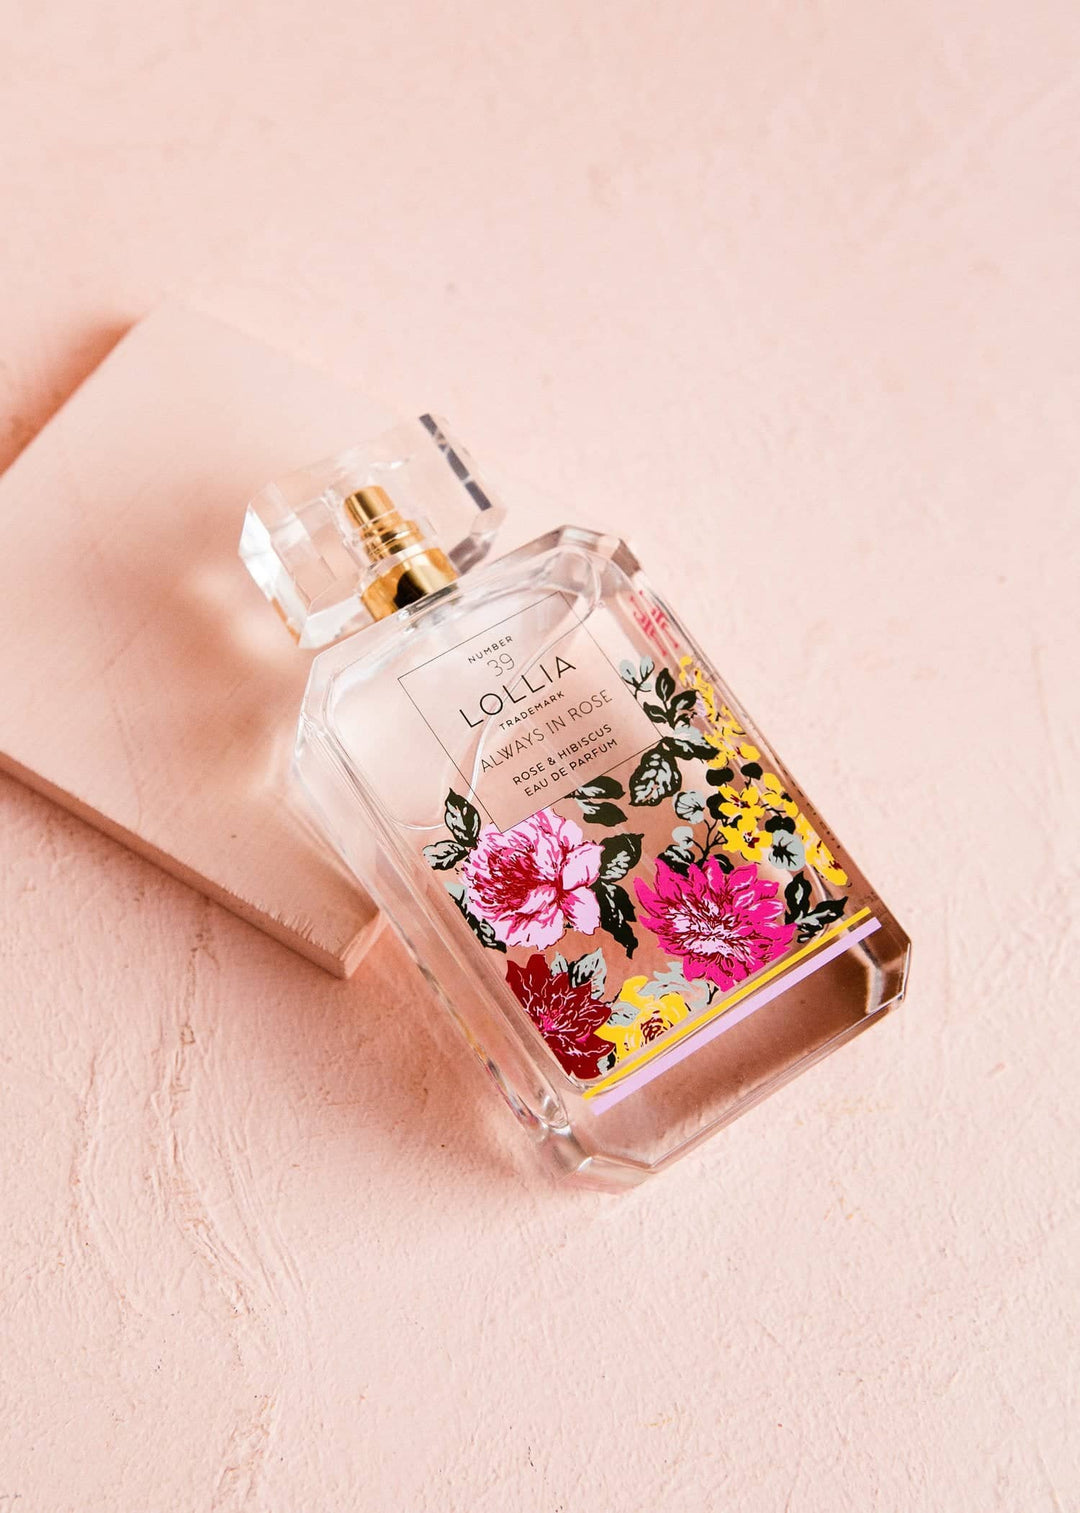 Amber Perfume – The GLW Shop